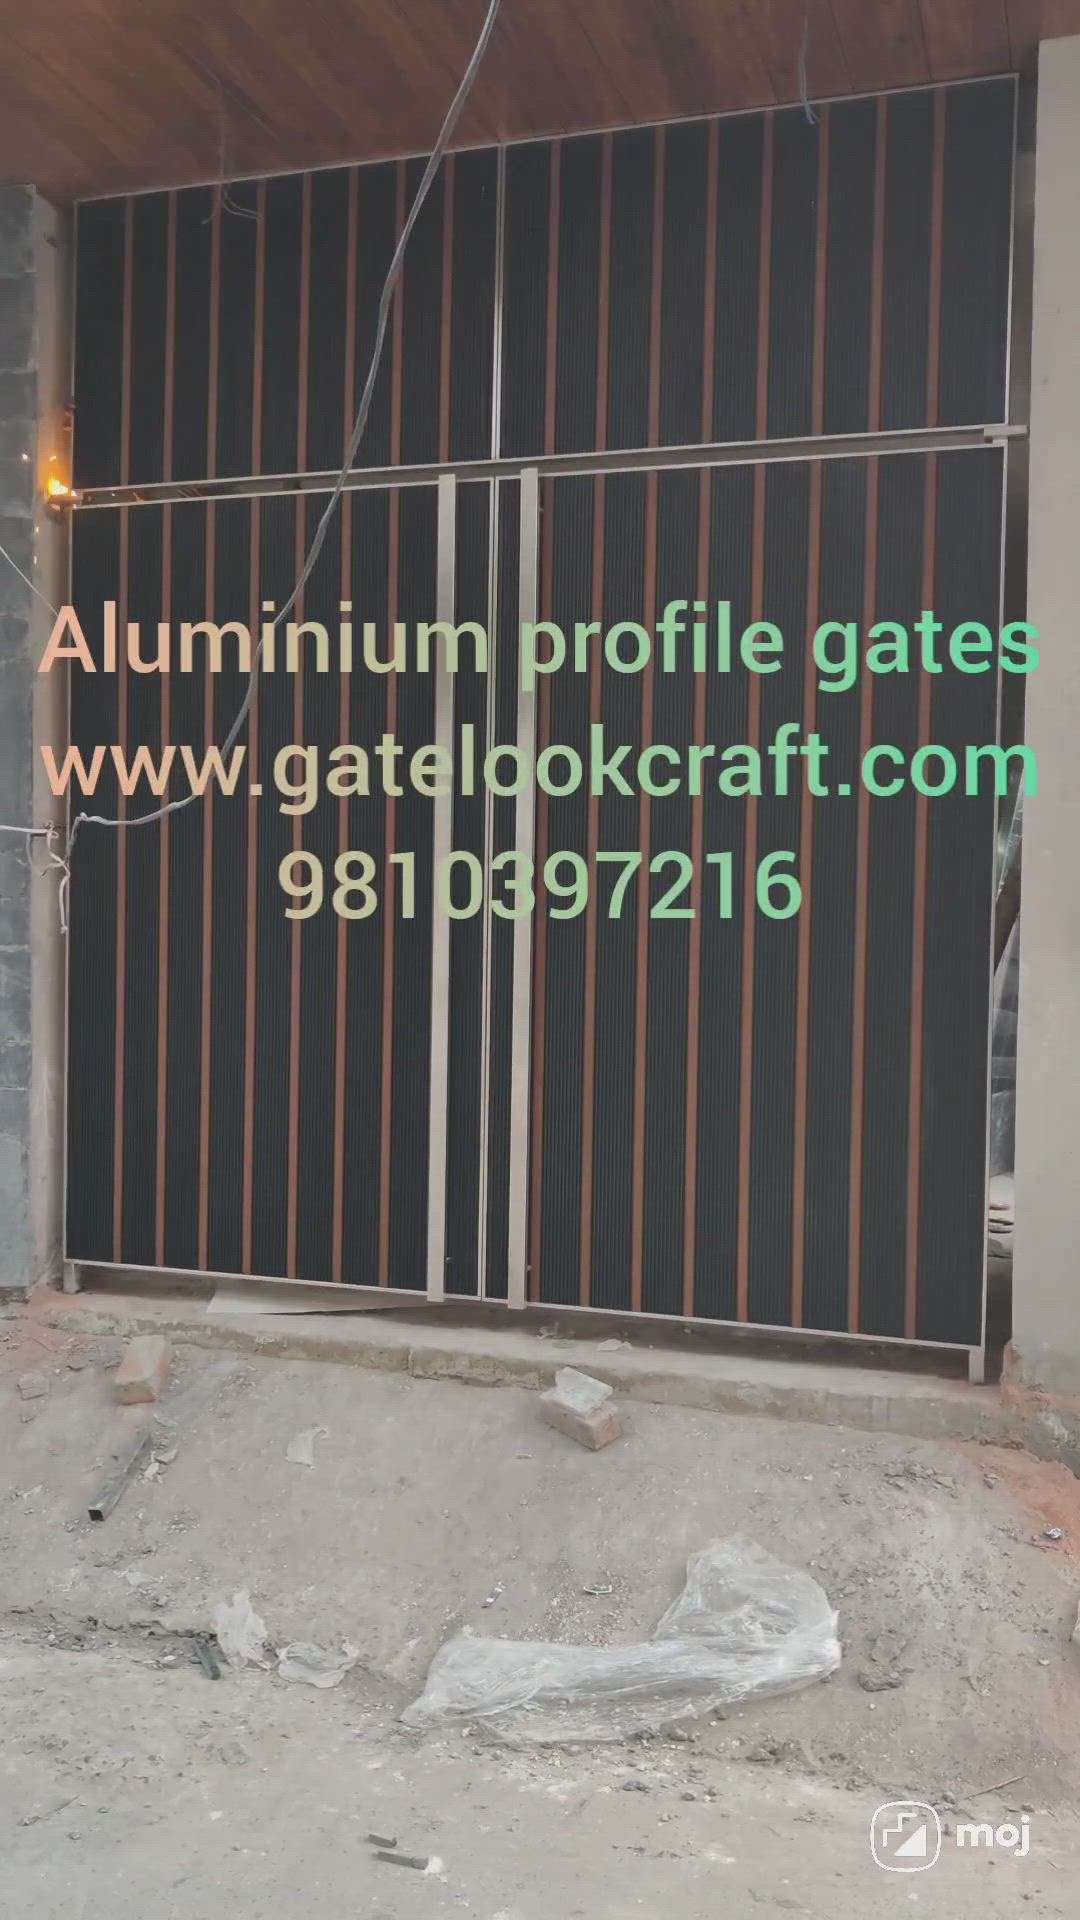 Aluminium profile gates by Hibza sterling interiors pvt ltd manufacture in Delhi #gatelookcraft #gates #aluminiumprofilegates #aluminiumgates #profilegates #maingates #designergates #gatesdesing #slidinggates #Aotumationgates 
#fancygates